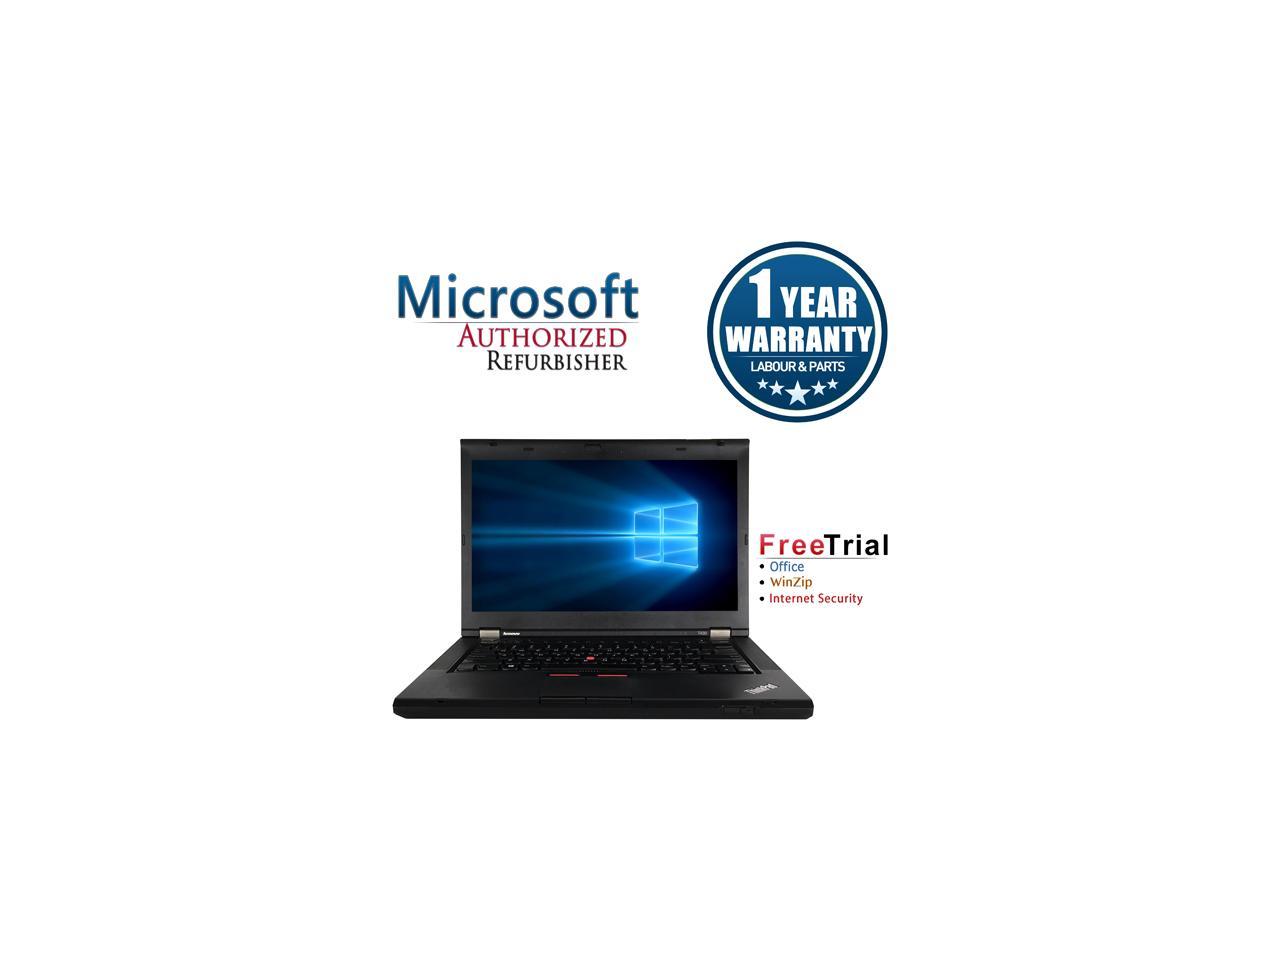 Refurbished Lenovo ThinkPad T430 14.0" Intel Core i5-3320M 2.6GHz 4GB DDR3 320GB DVD Windows 10 Professional 64 Bits 1 Year Warranty